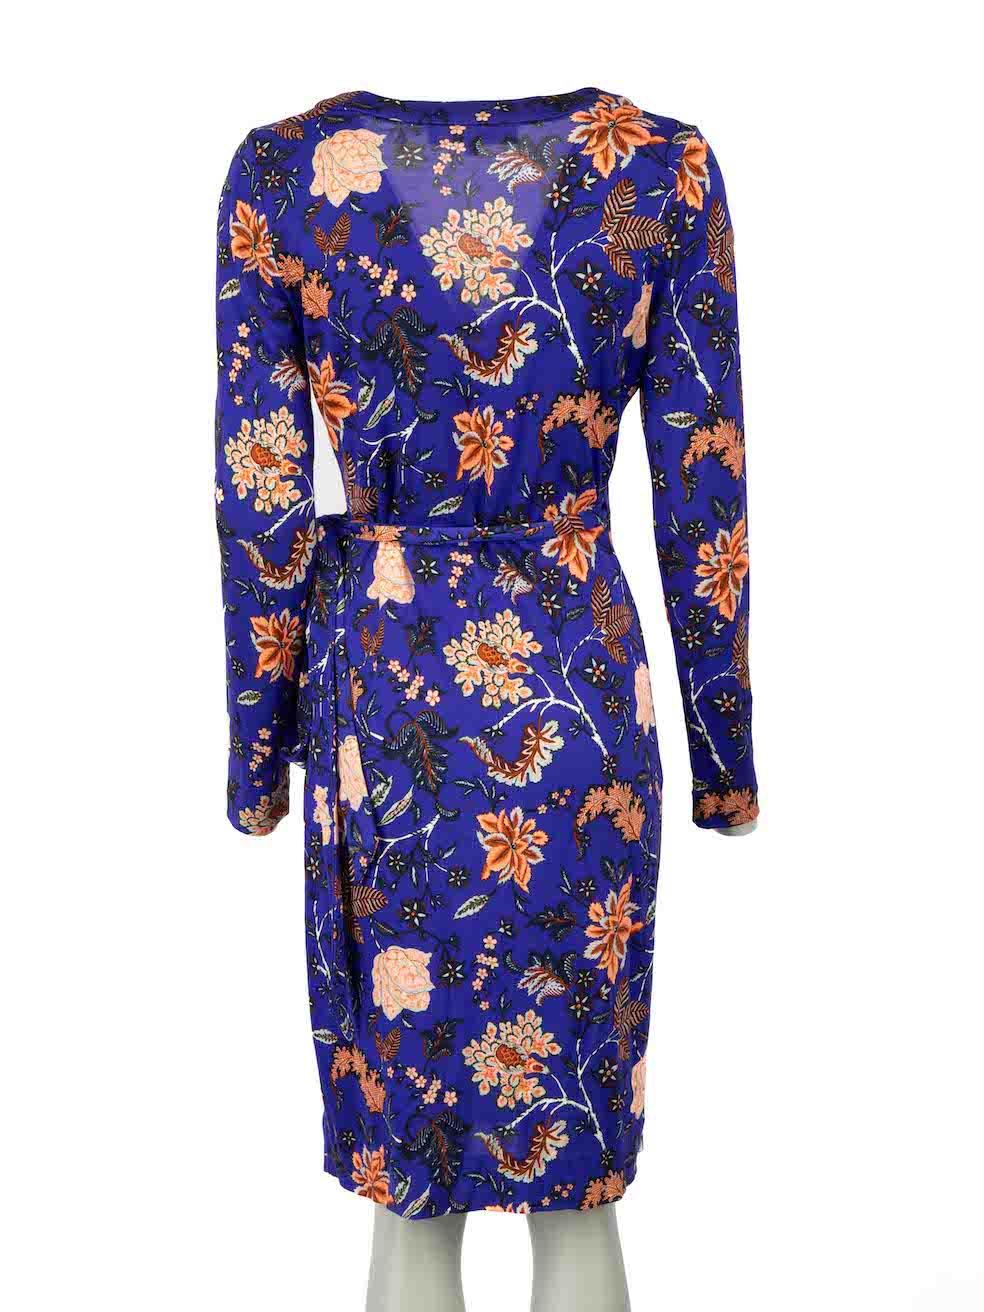 Diane Von Furstenberg Purple Floral Print Dress Size S In Excellent Condition For Sale In London, GB